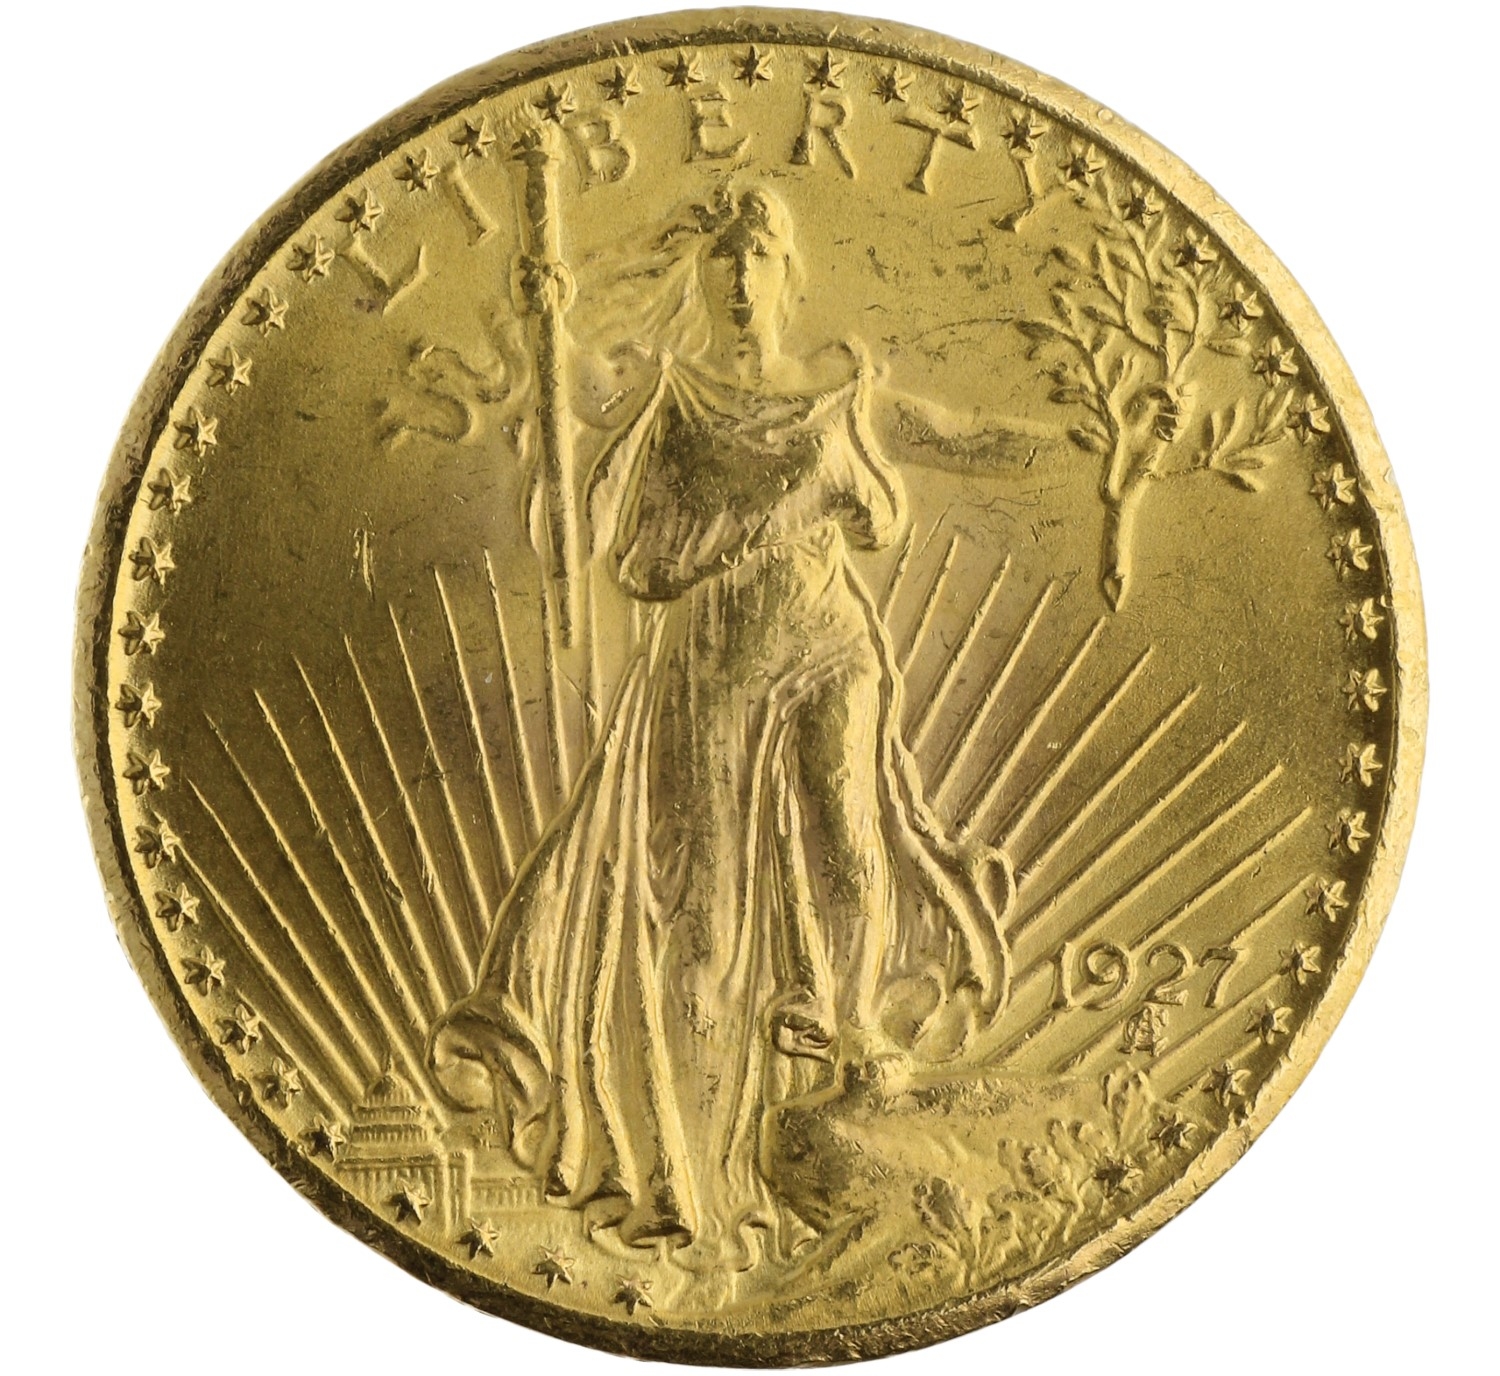 20 Dollars - USA - 1927